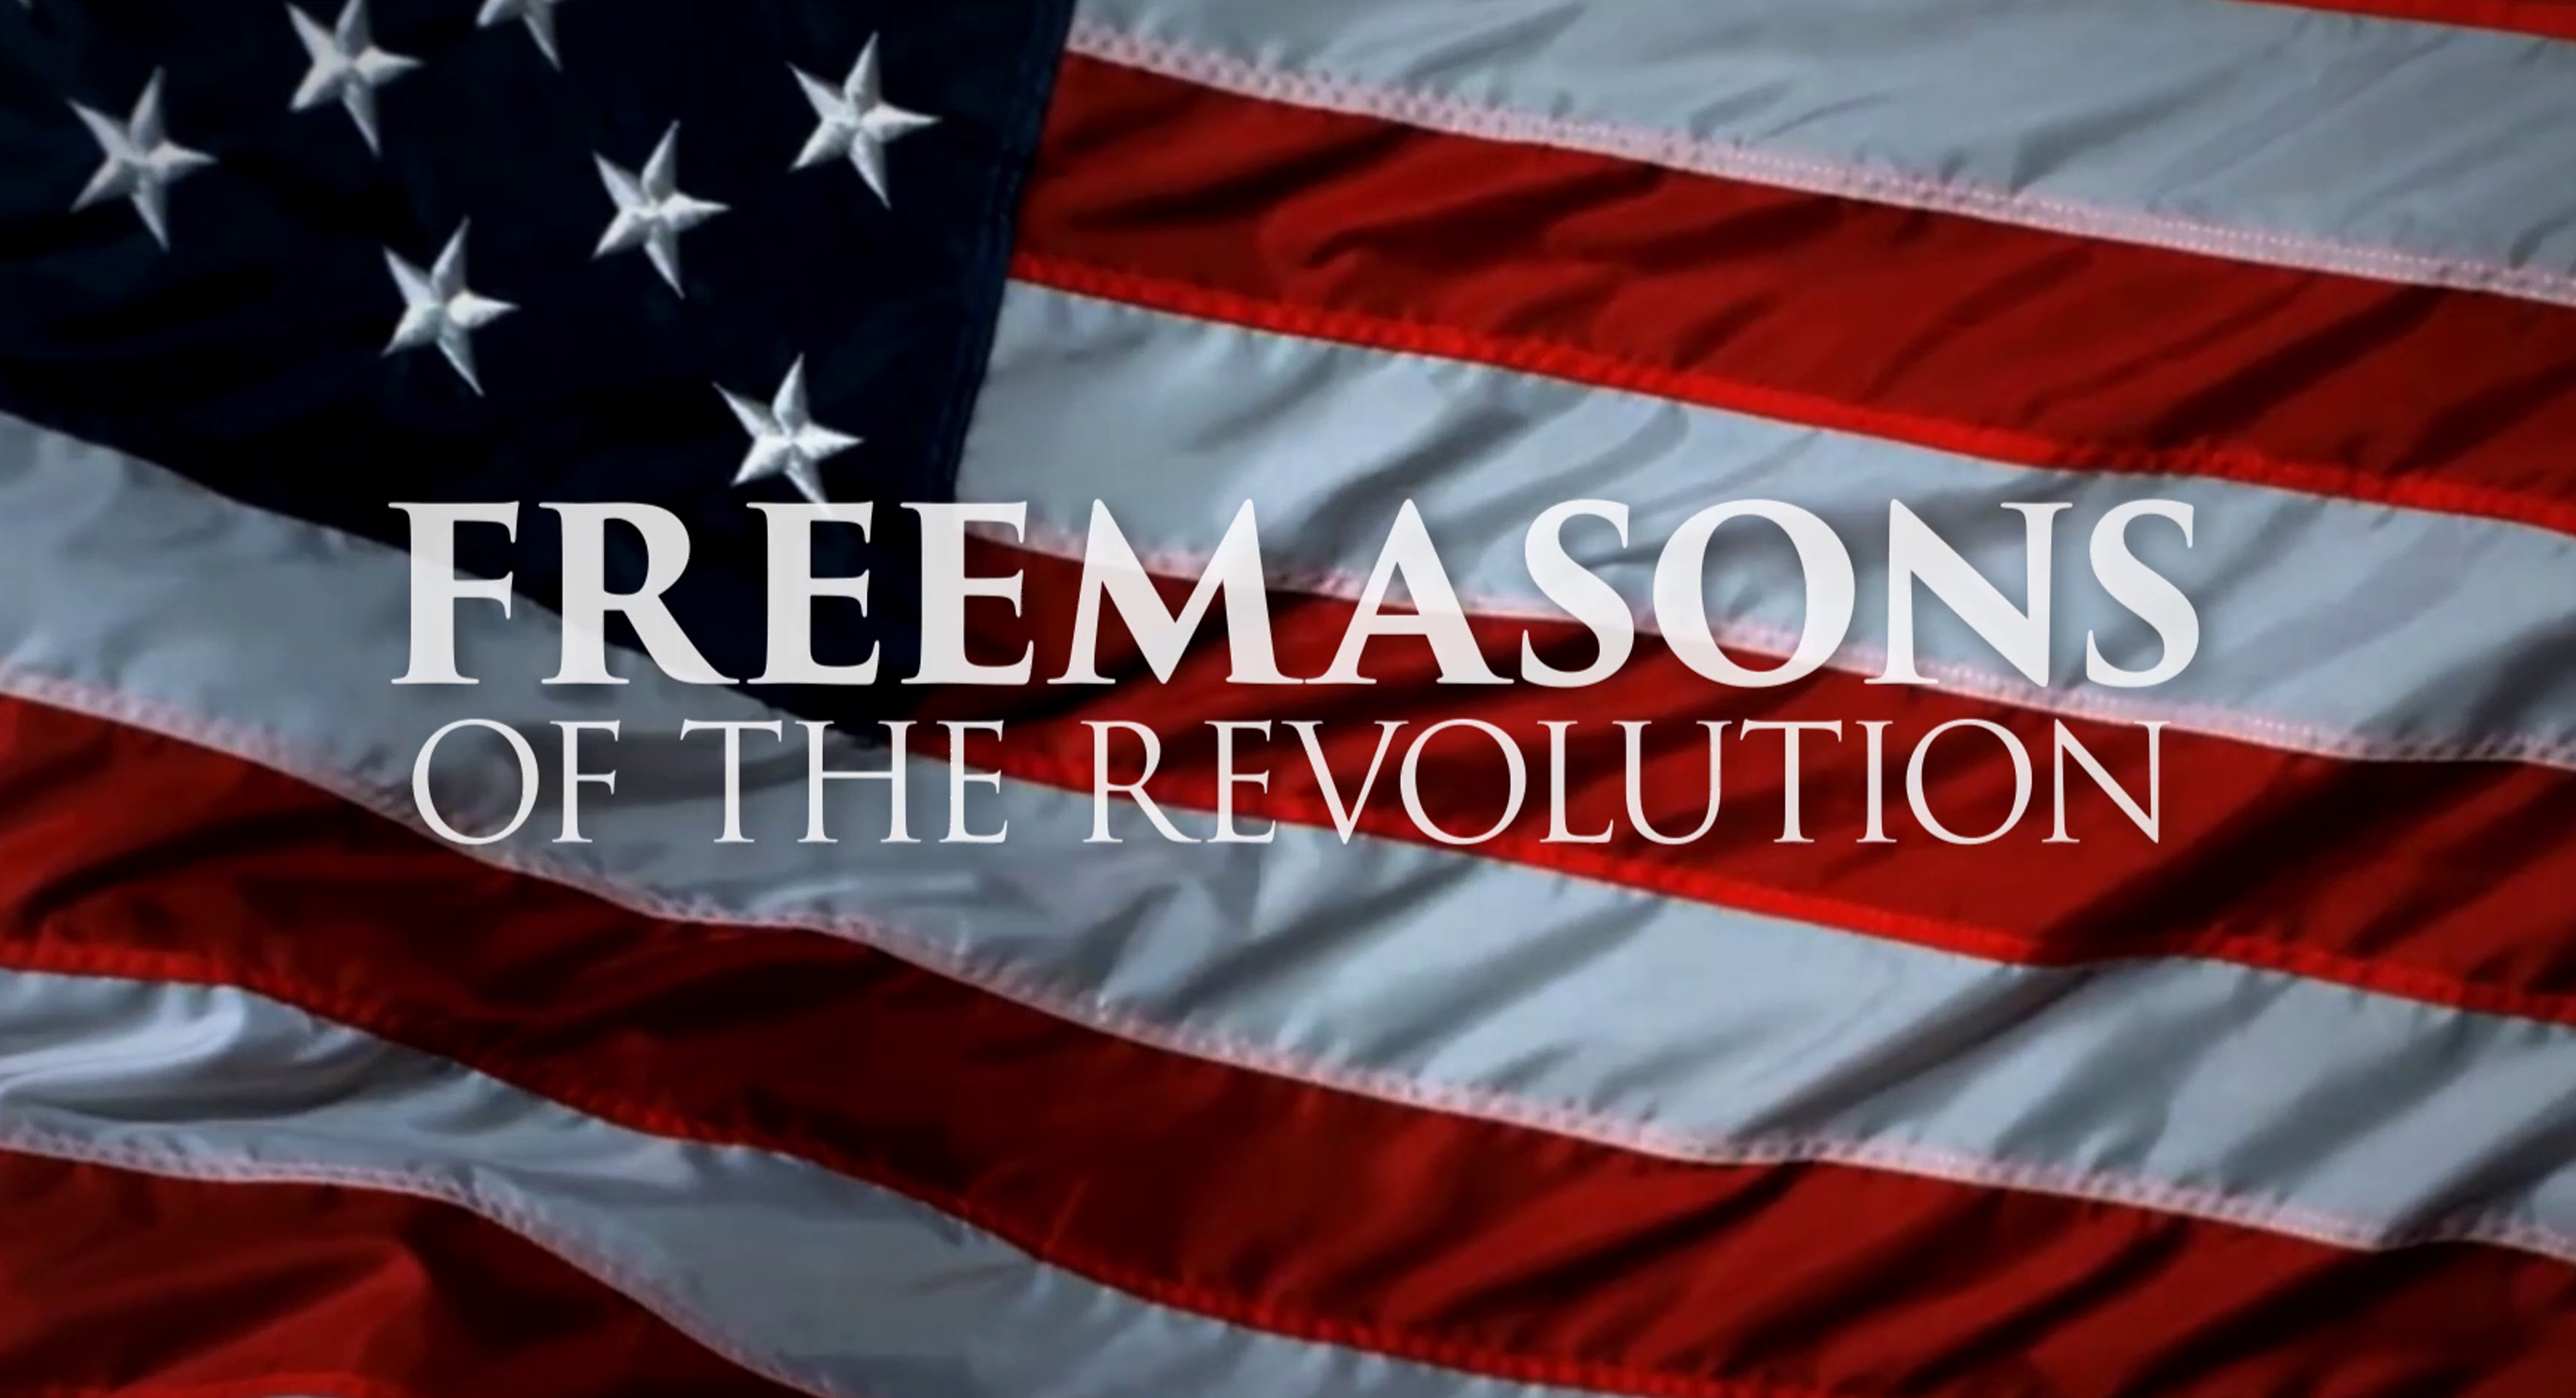 Freemasons of the Revolution